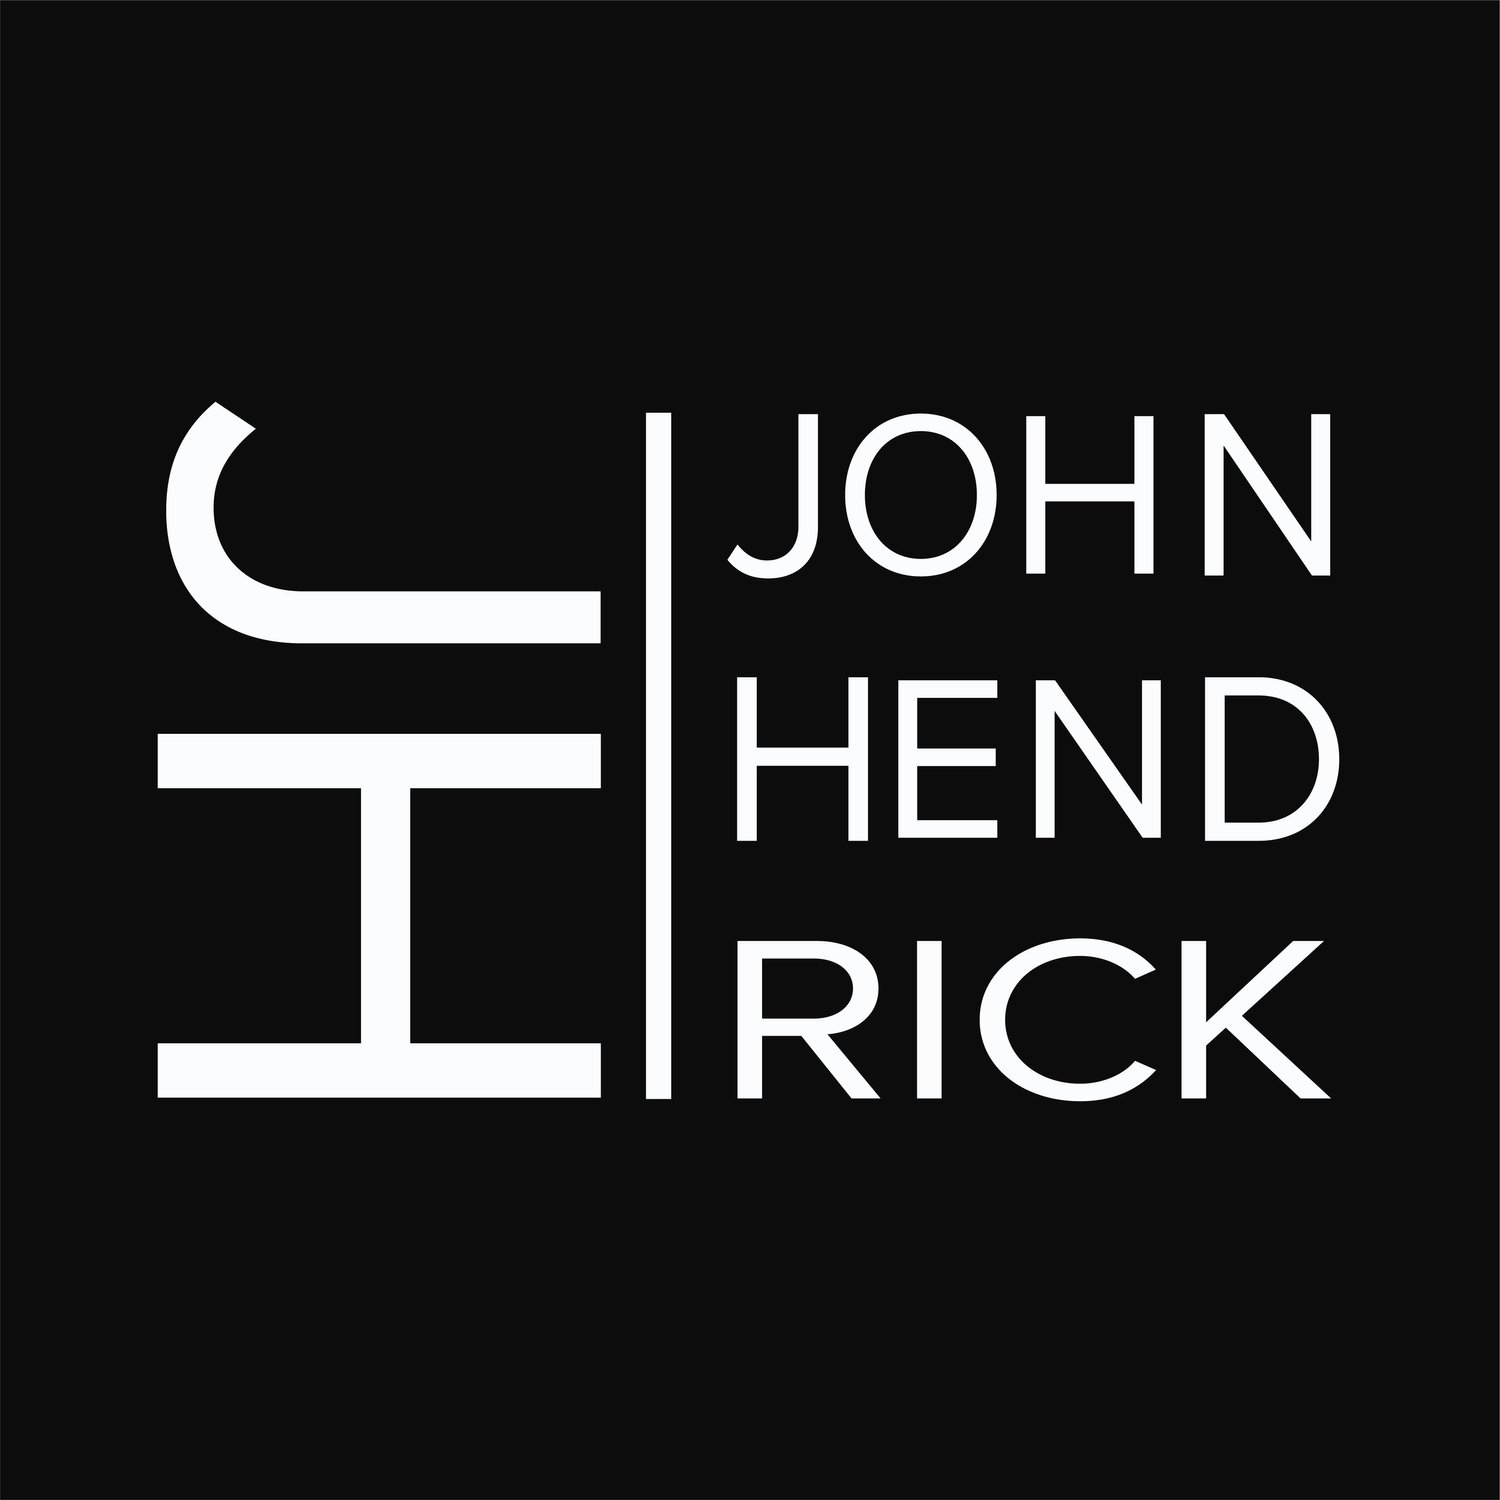 JOHN HENDRICK